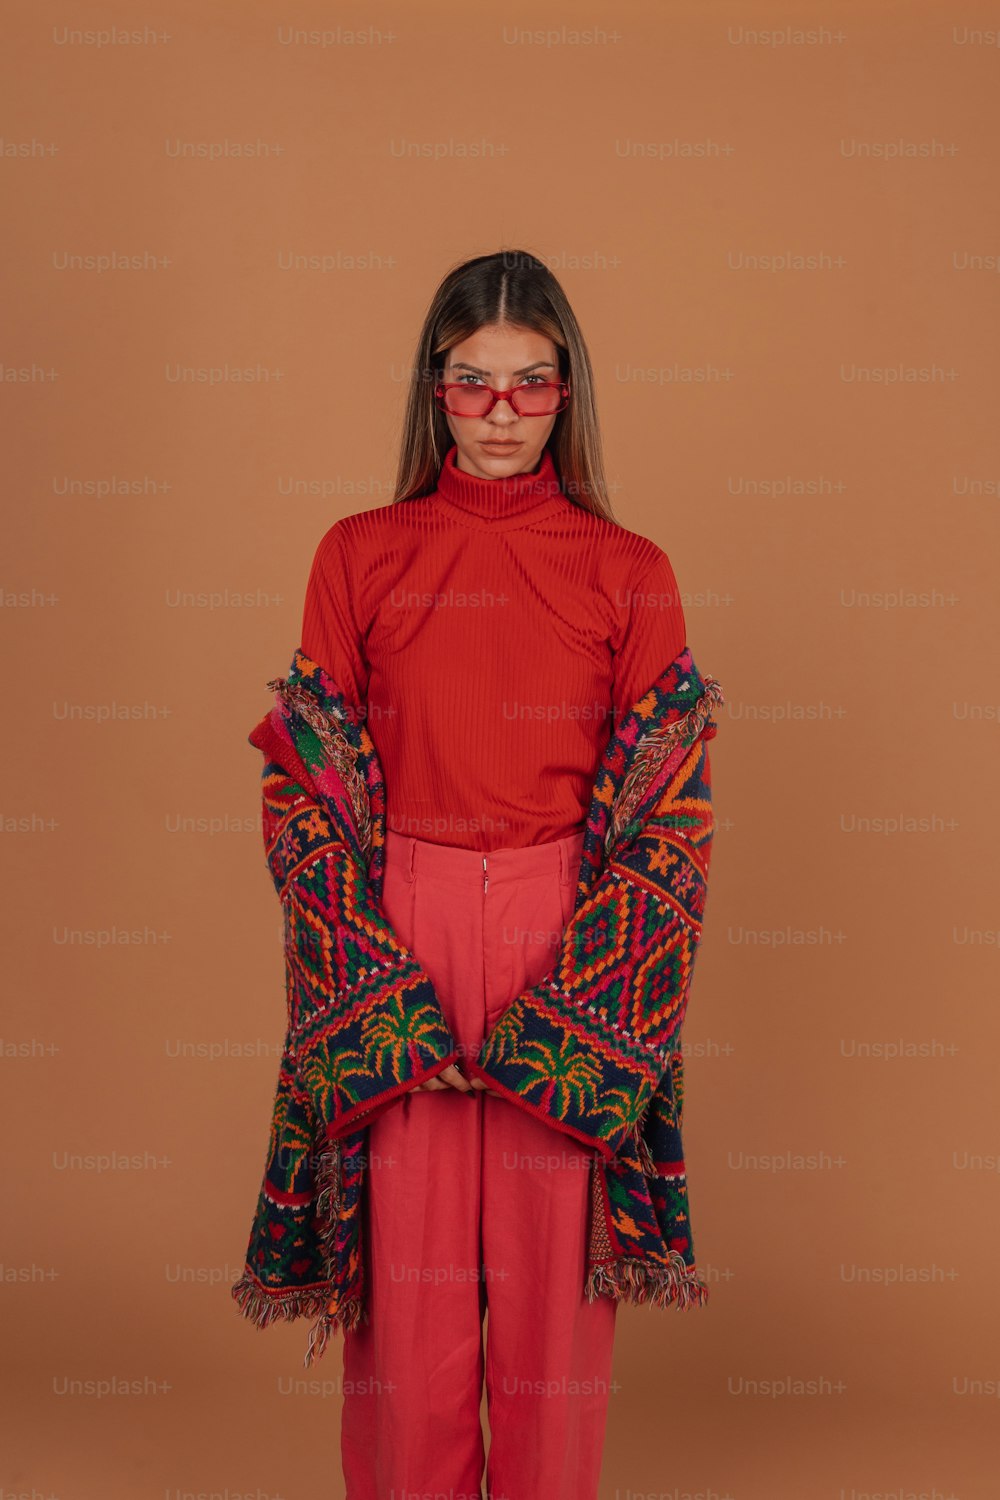 Woman wearing red camisole photo – Free Pants Image on Unsplash